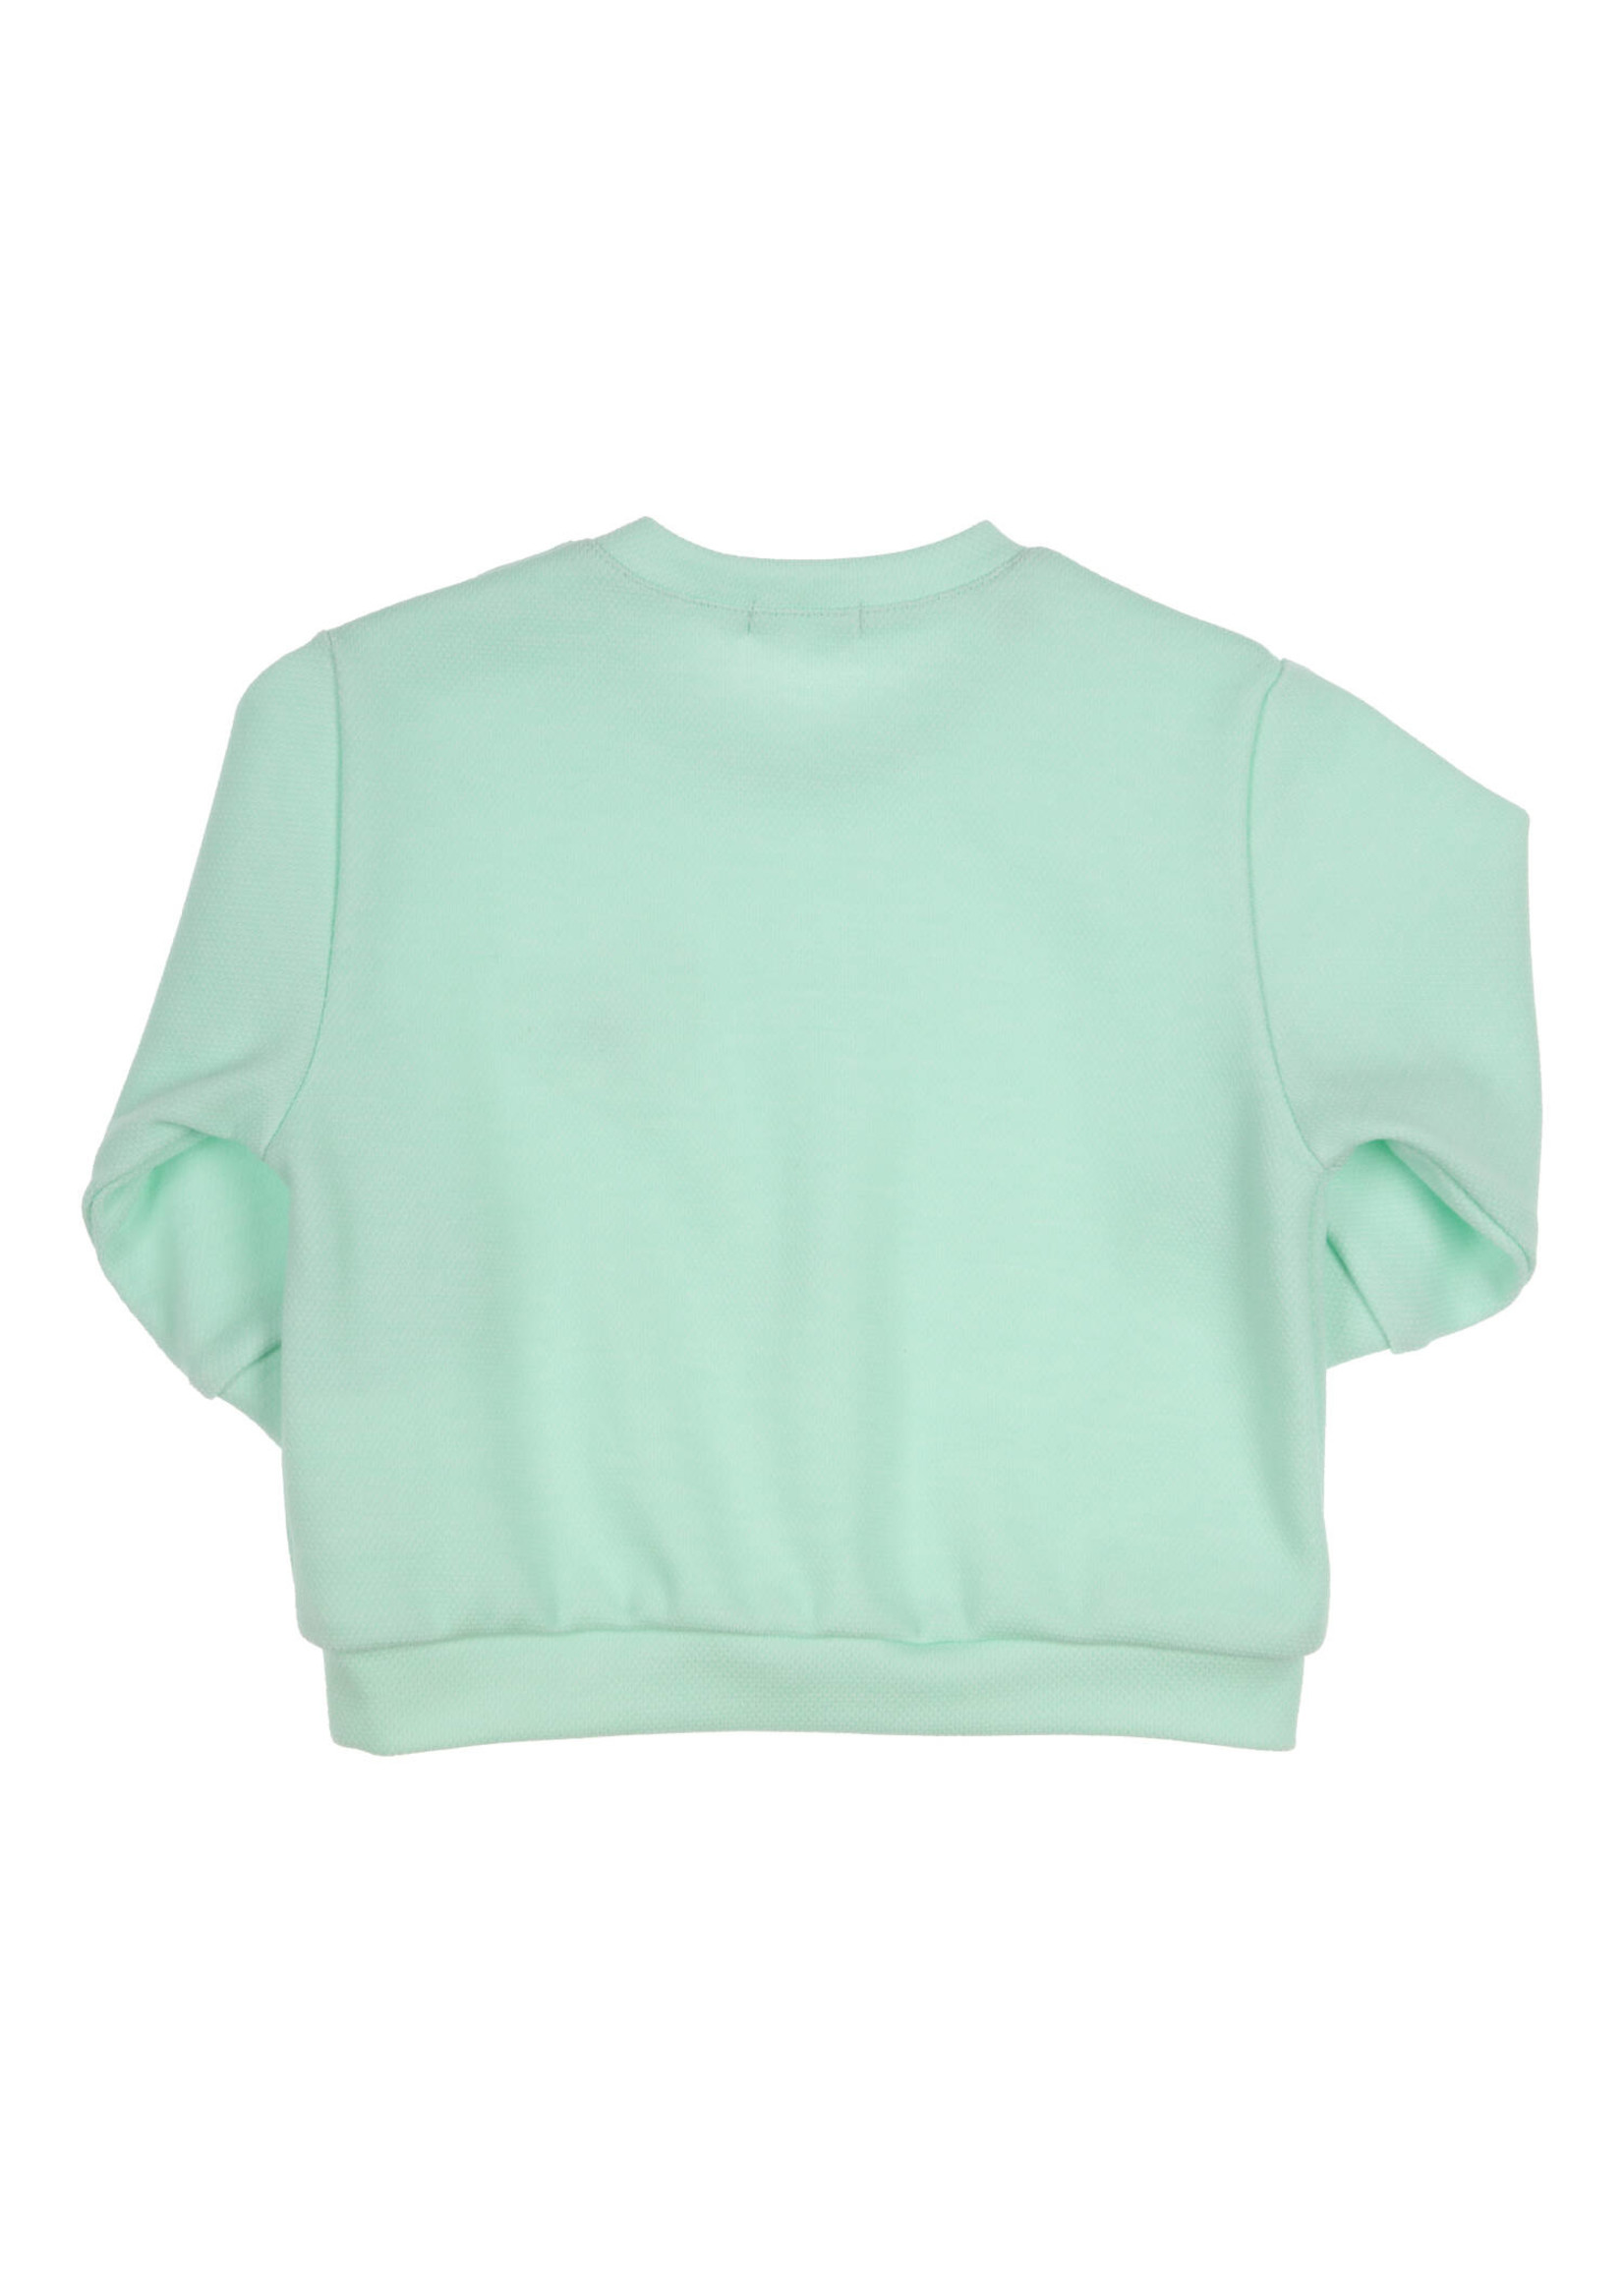 Gymp Sweater Britney Green 352-3374-10